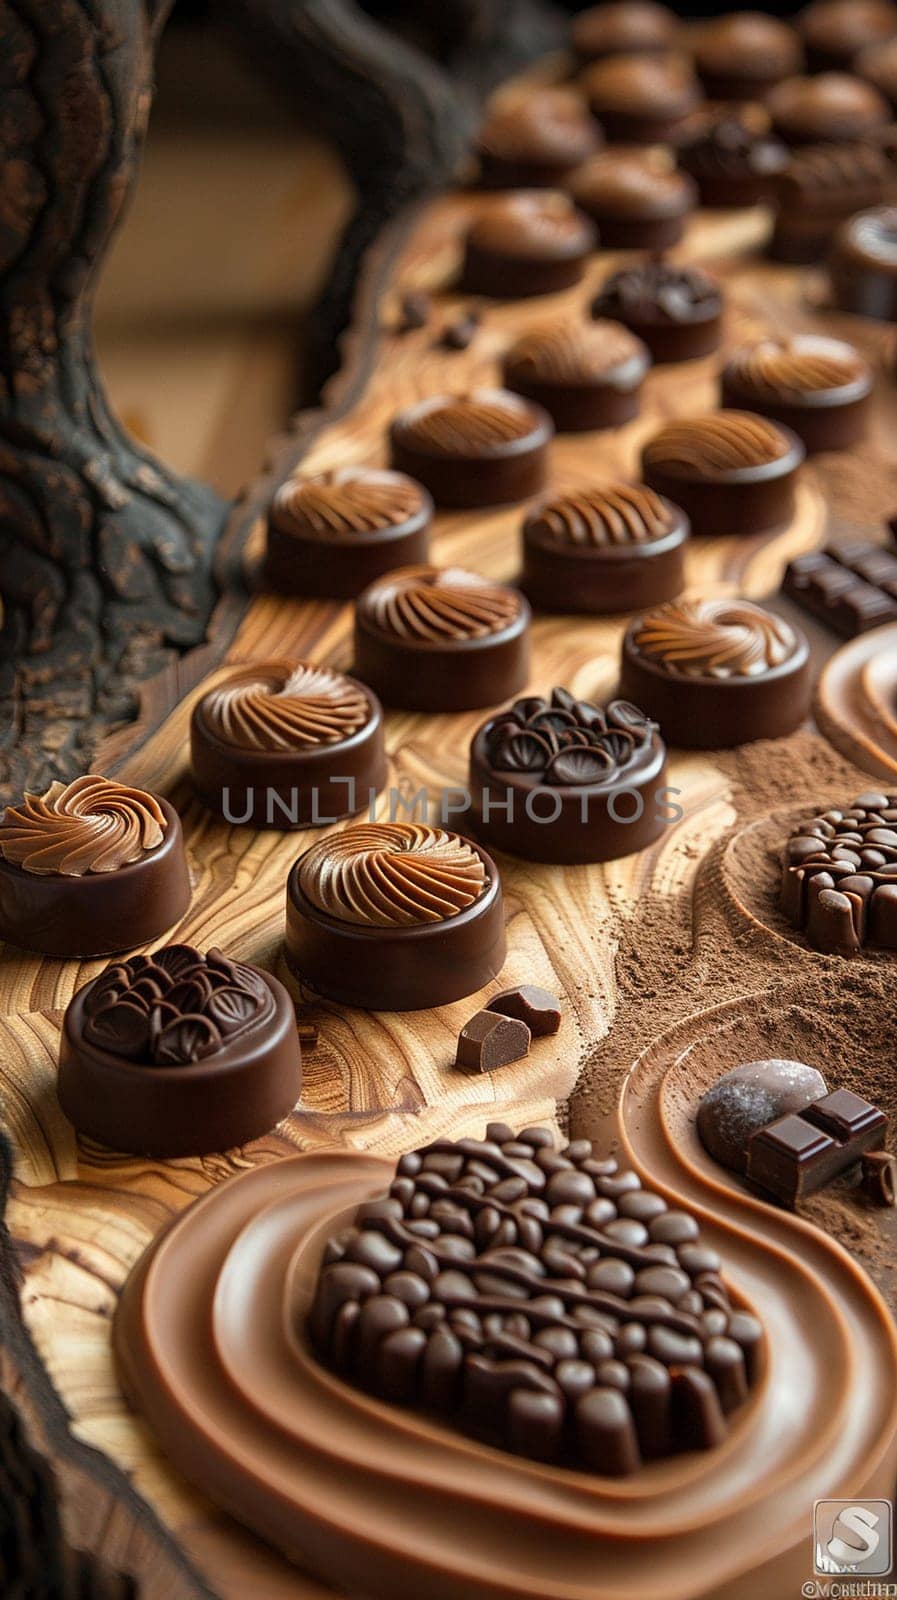 Chocolatier Studio Designs Decadent Masterpieces in Business of Sweet Arts by Benzoix